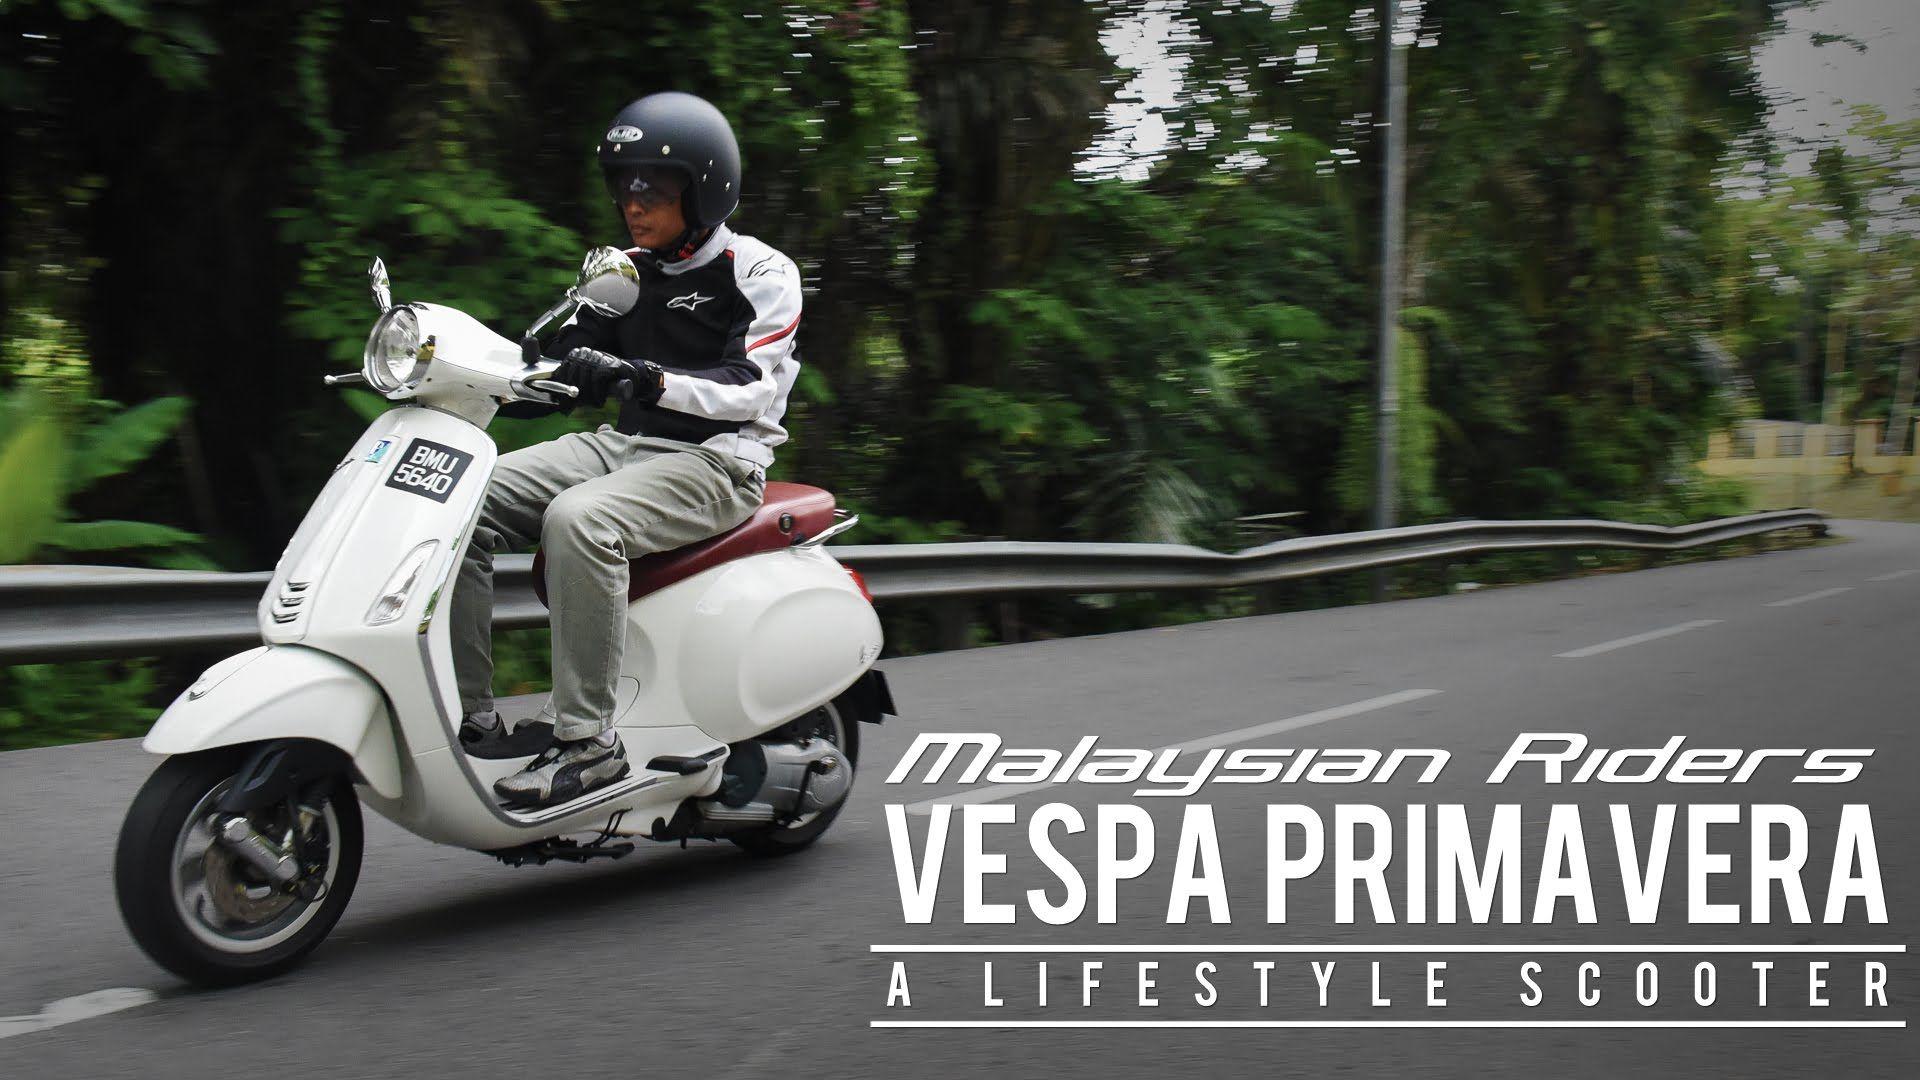 Vespa Primavera: A Lifestyle Scooter - Ep.3